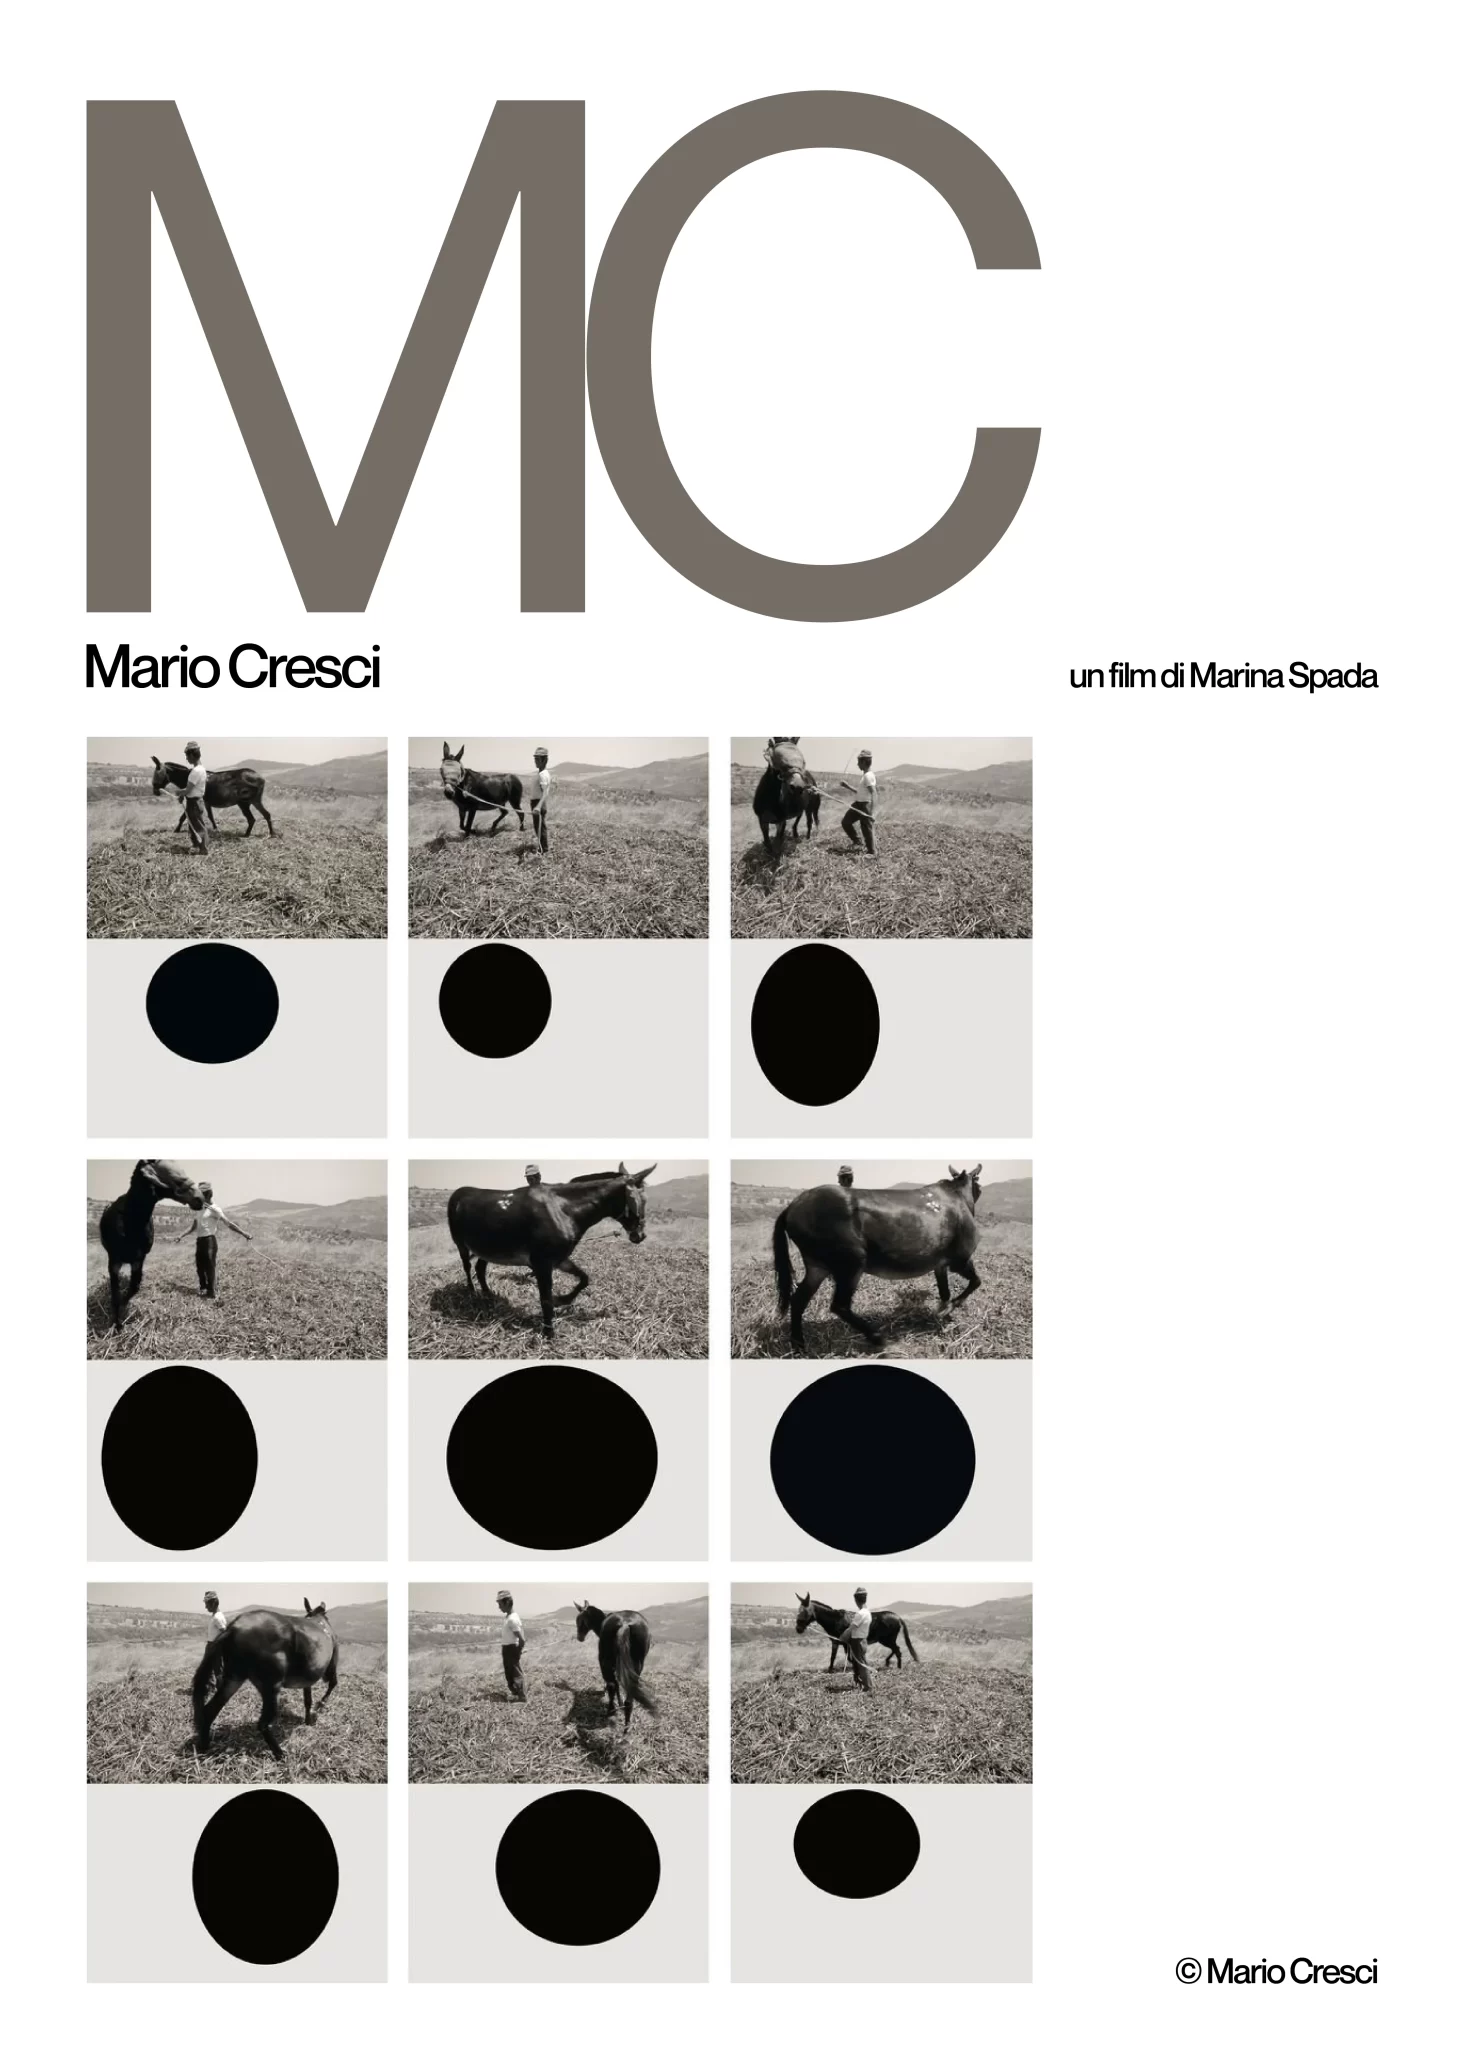 Locandina: MC, Mario Cresci, un film di Marina Spada. Fotografia “Geometria naturalis” 2013, scattata da Mario Cresci.